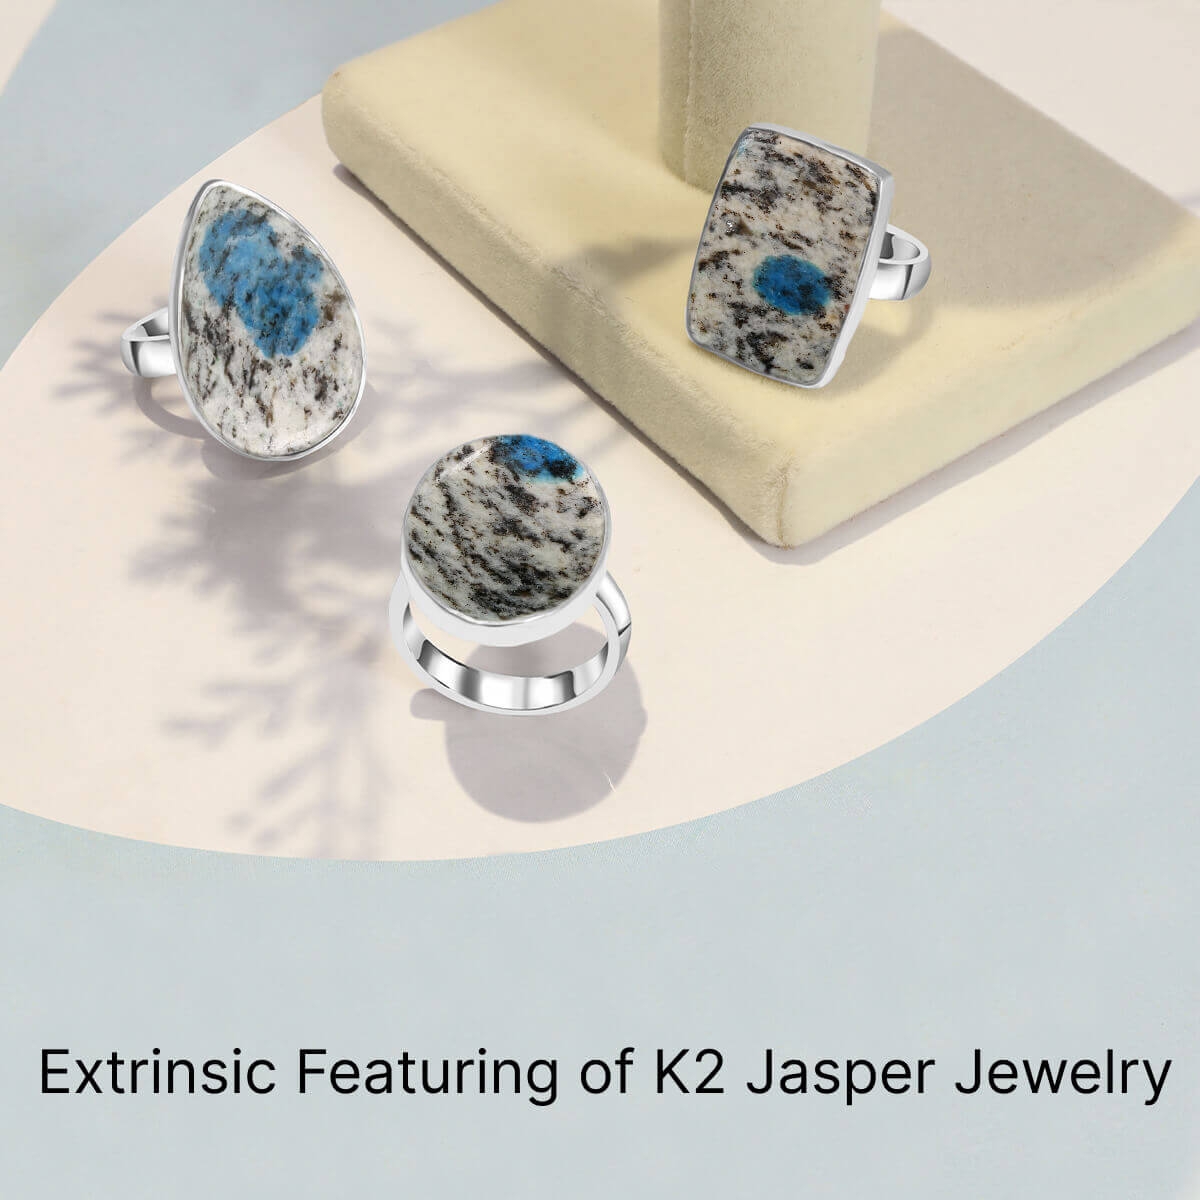 Metaphysical Properties of K2 Jasper Jewelry